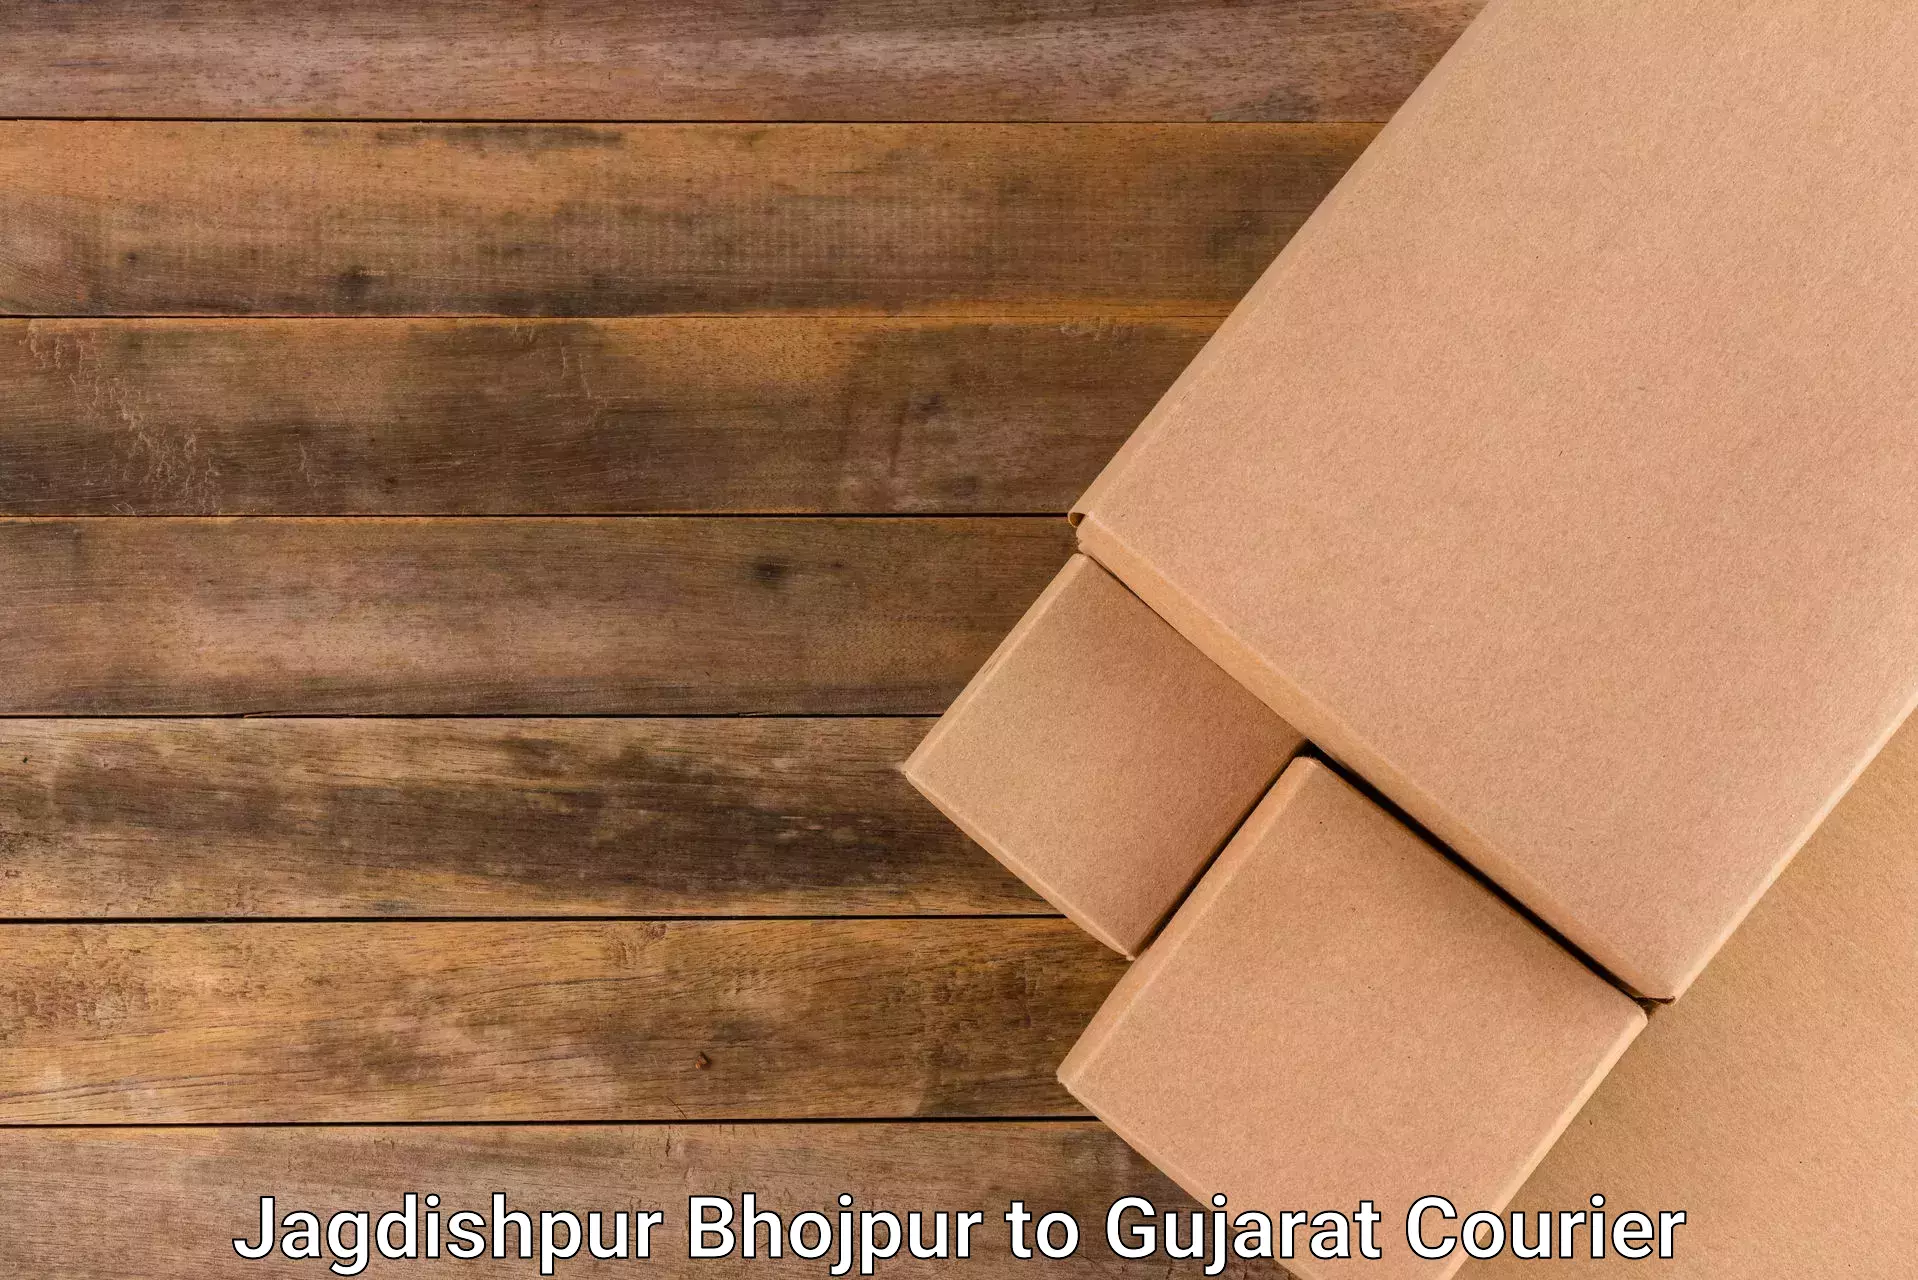 Reliable delivery network Jagdishpur Bhojpur to Narmada Gujarat